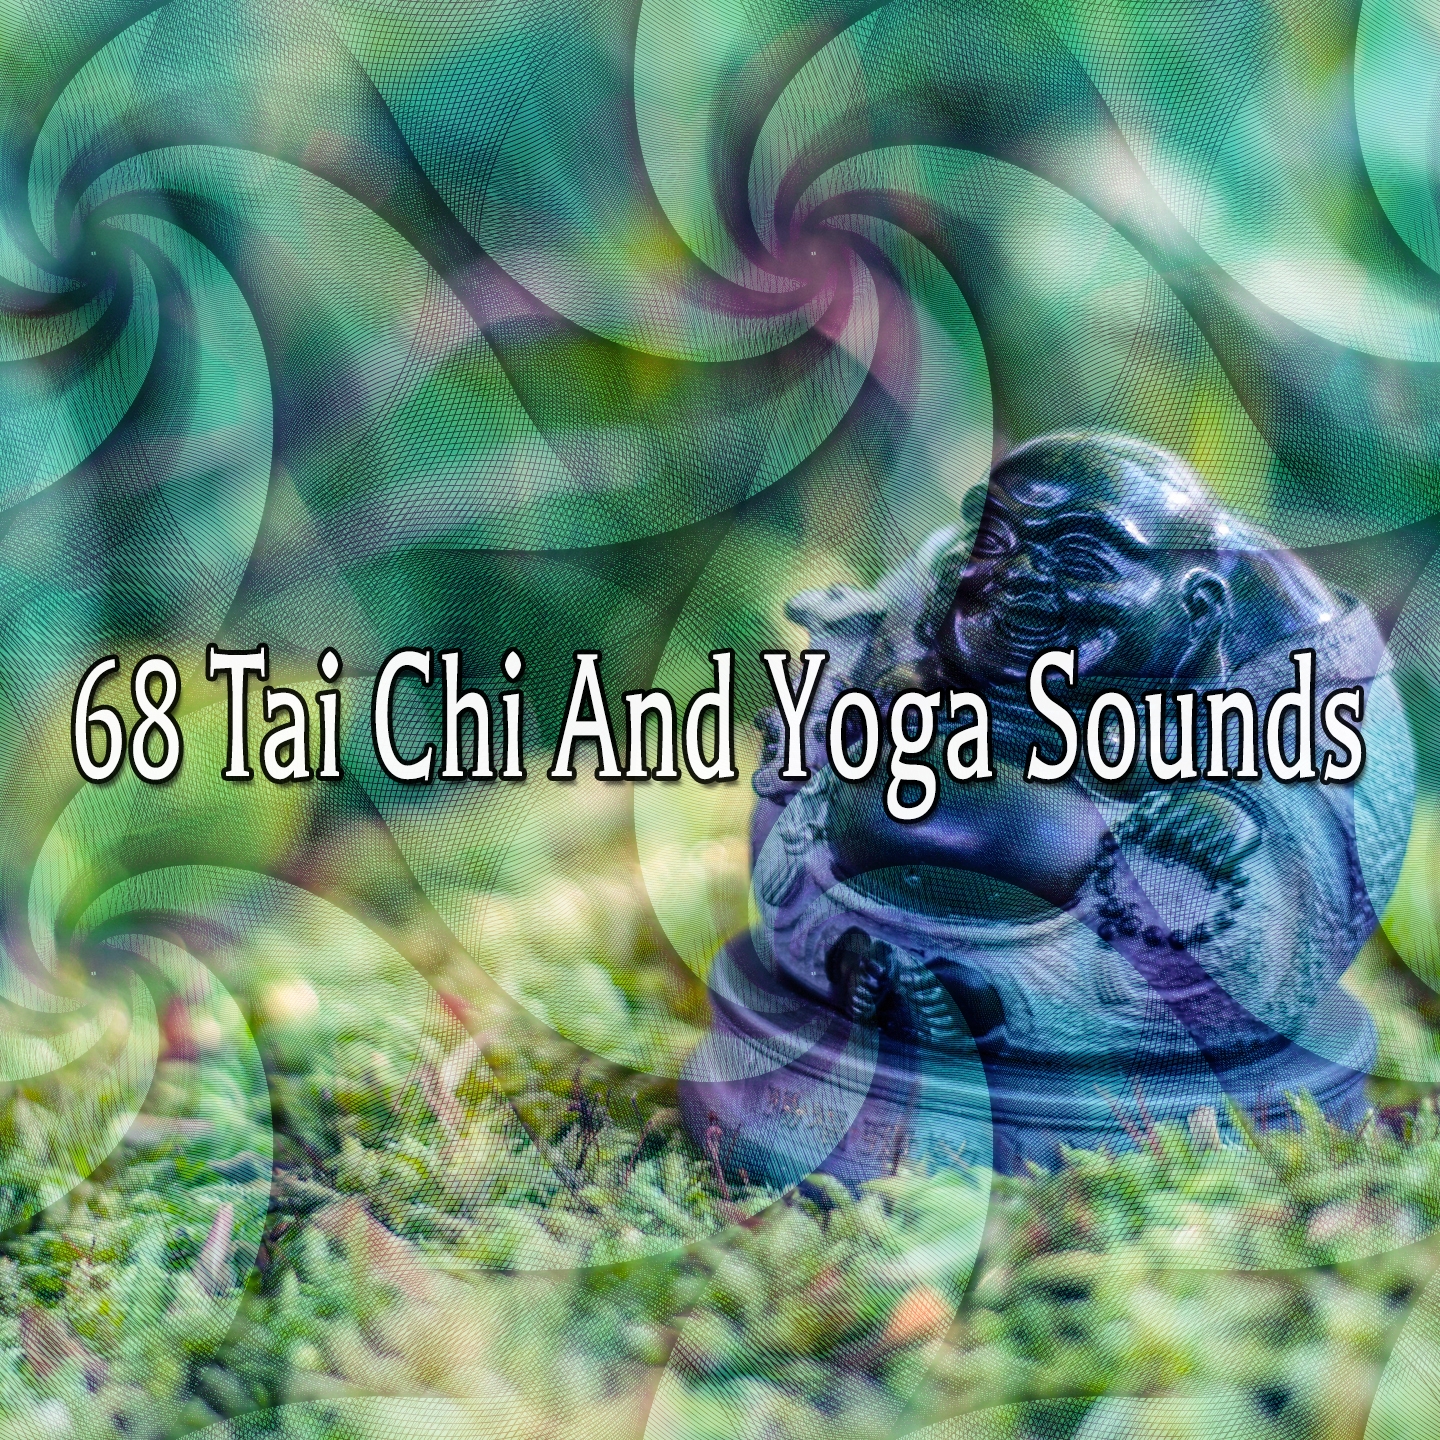 68 Tai Chi And Yoga Sounds